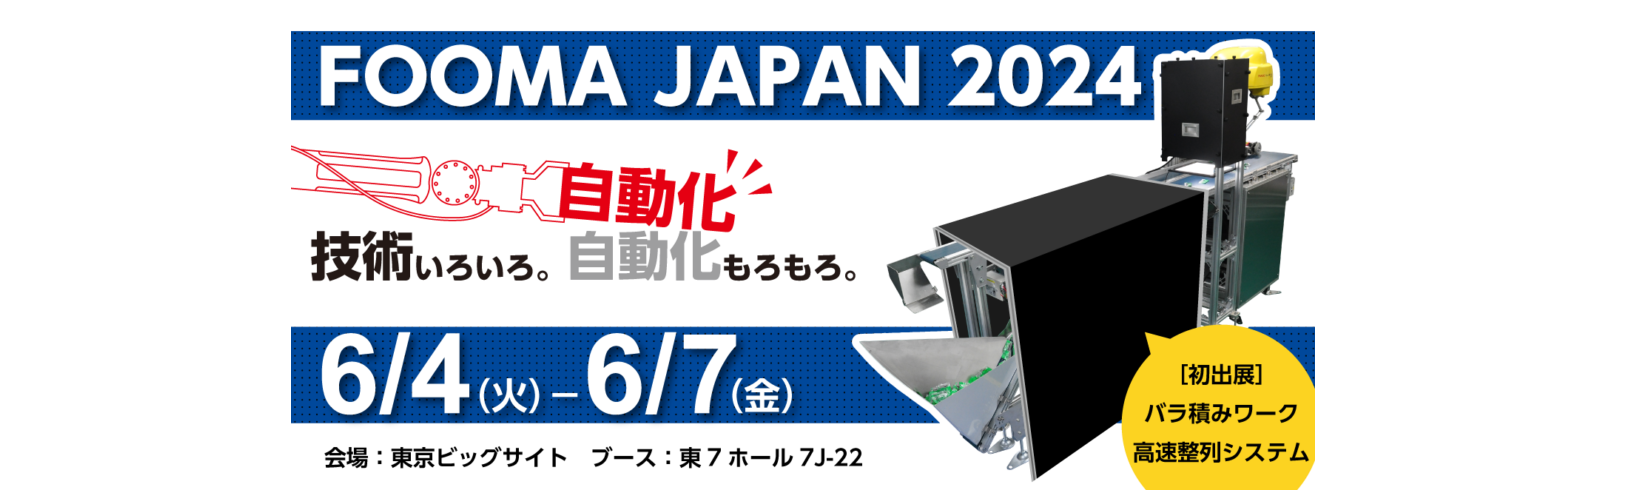 「FOOMA JAPAN 2024」に株式会社ピーエムティーと共同出展